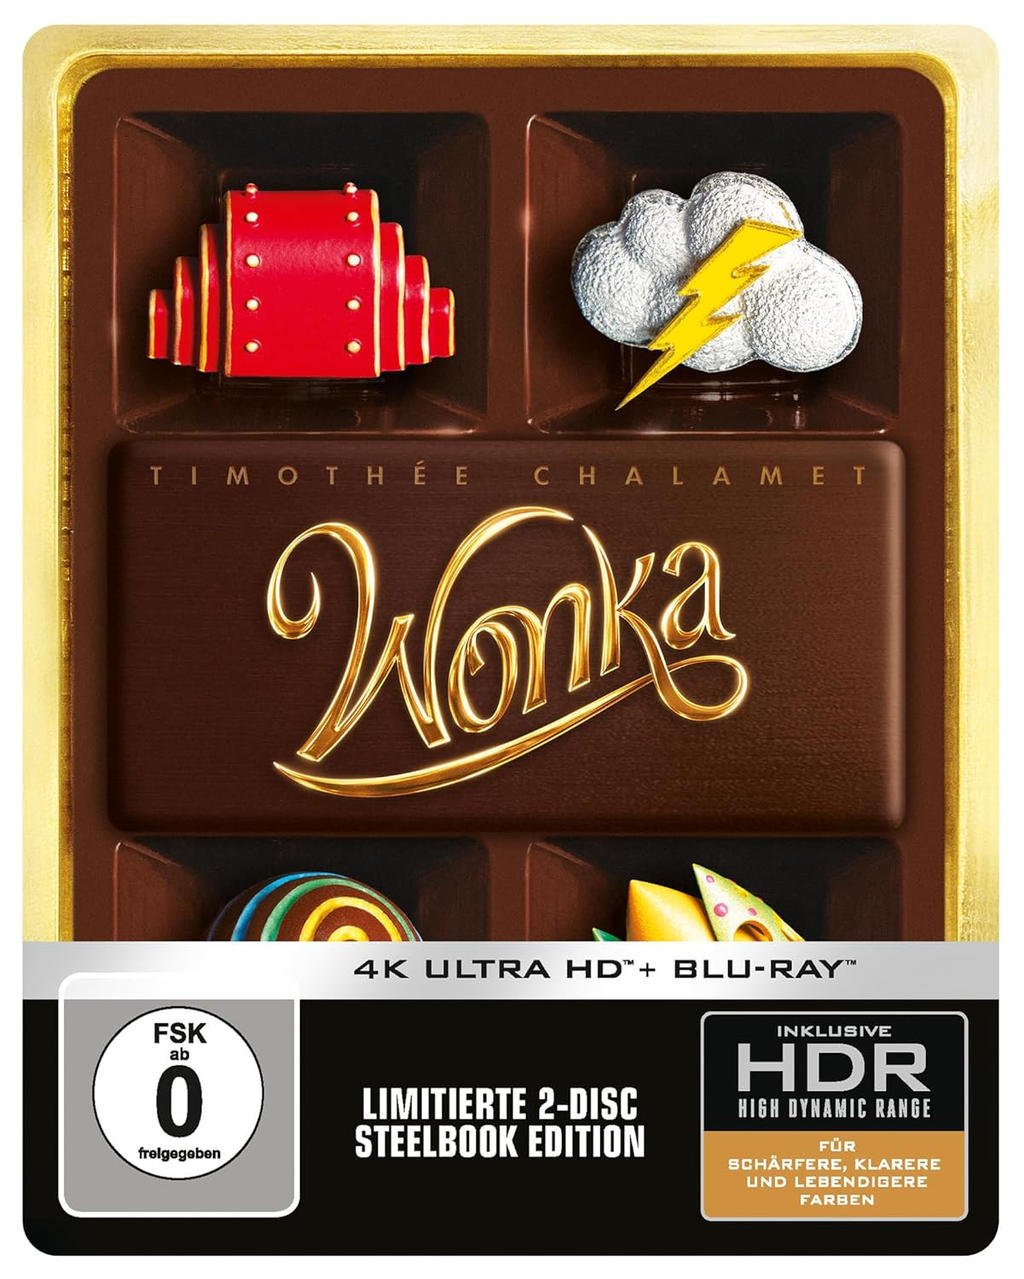 Blu-ray Exklusive Wonka Steelbookedition